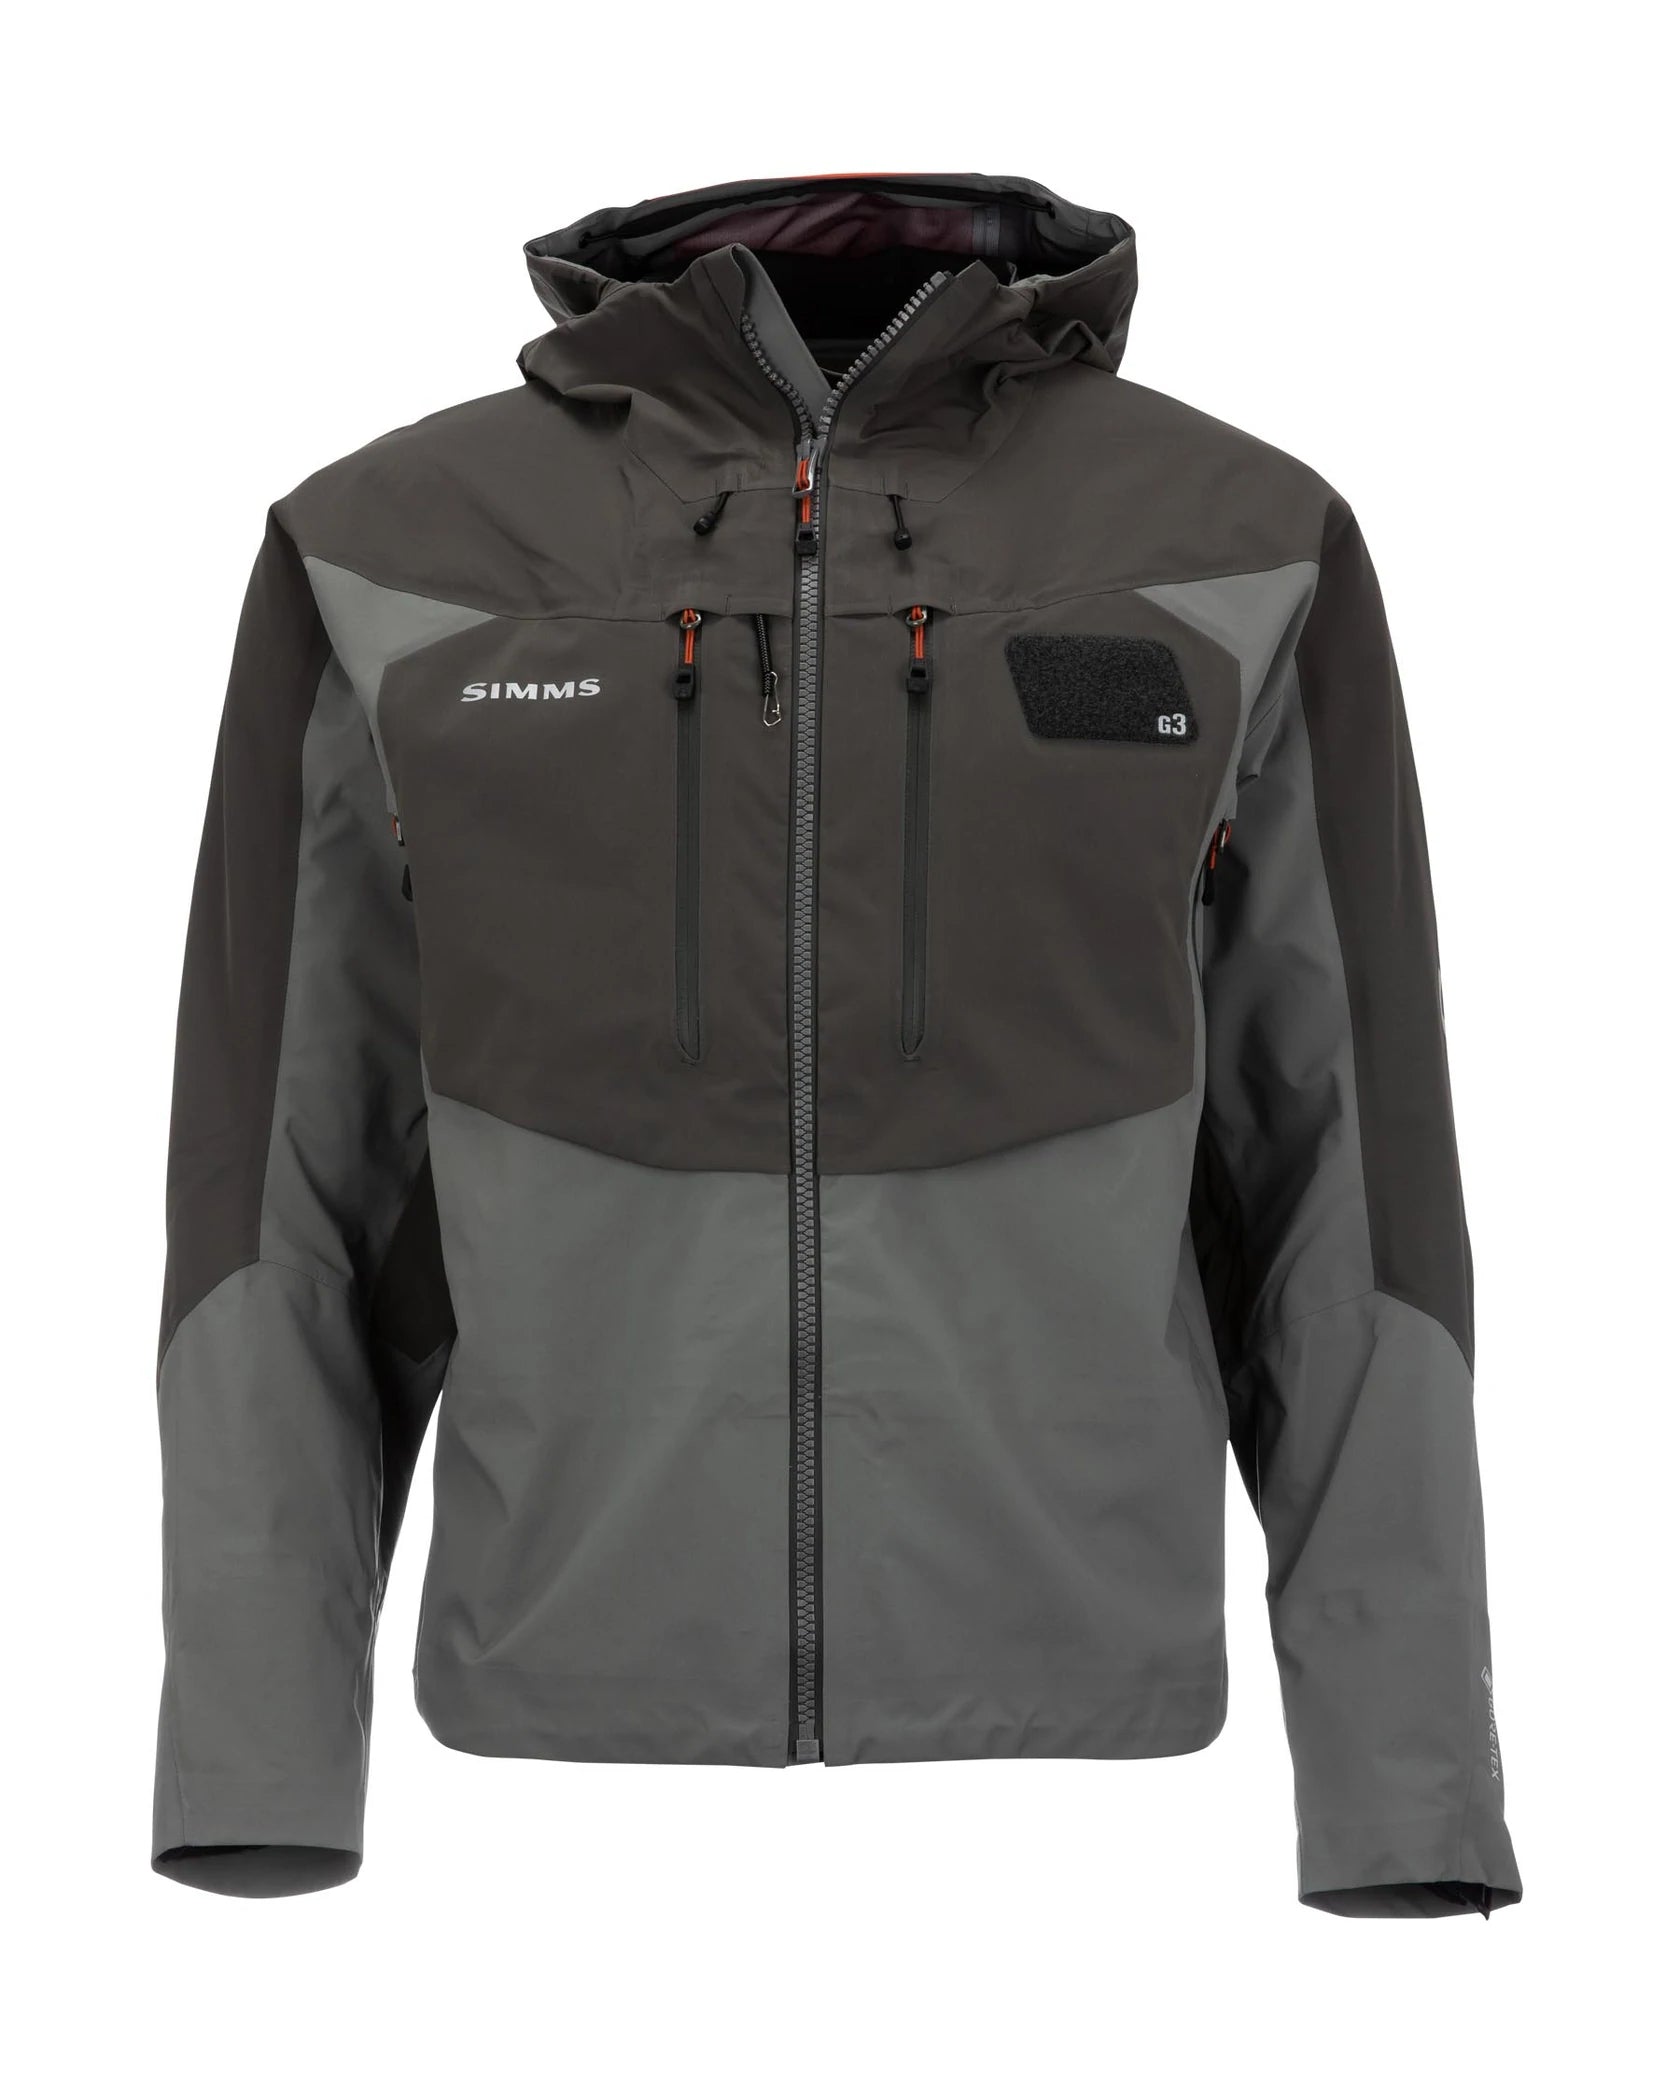 Technical Jackets & Rainwear – Sportinglife Turangi